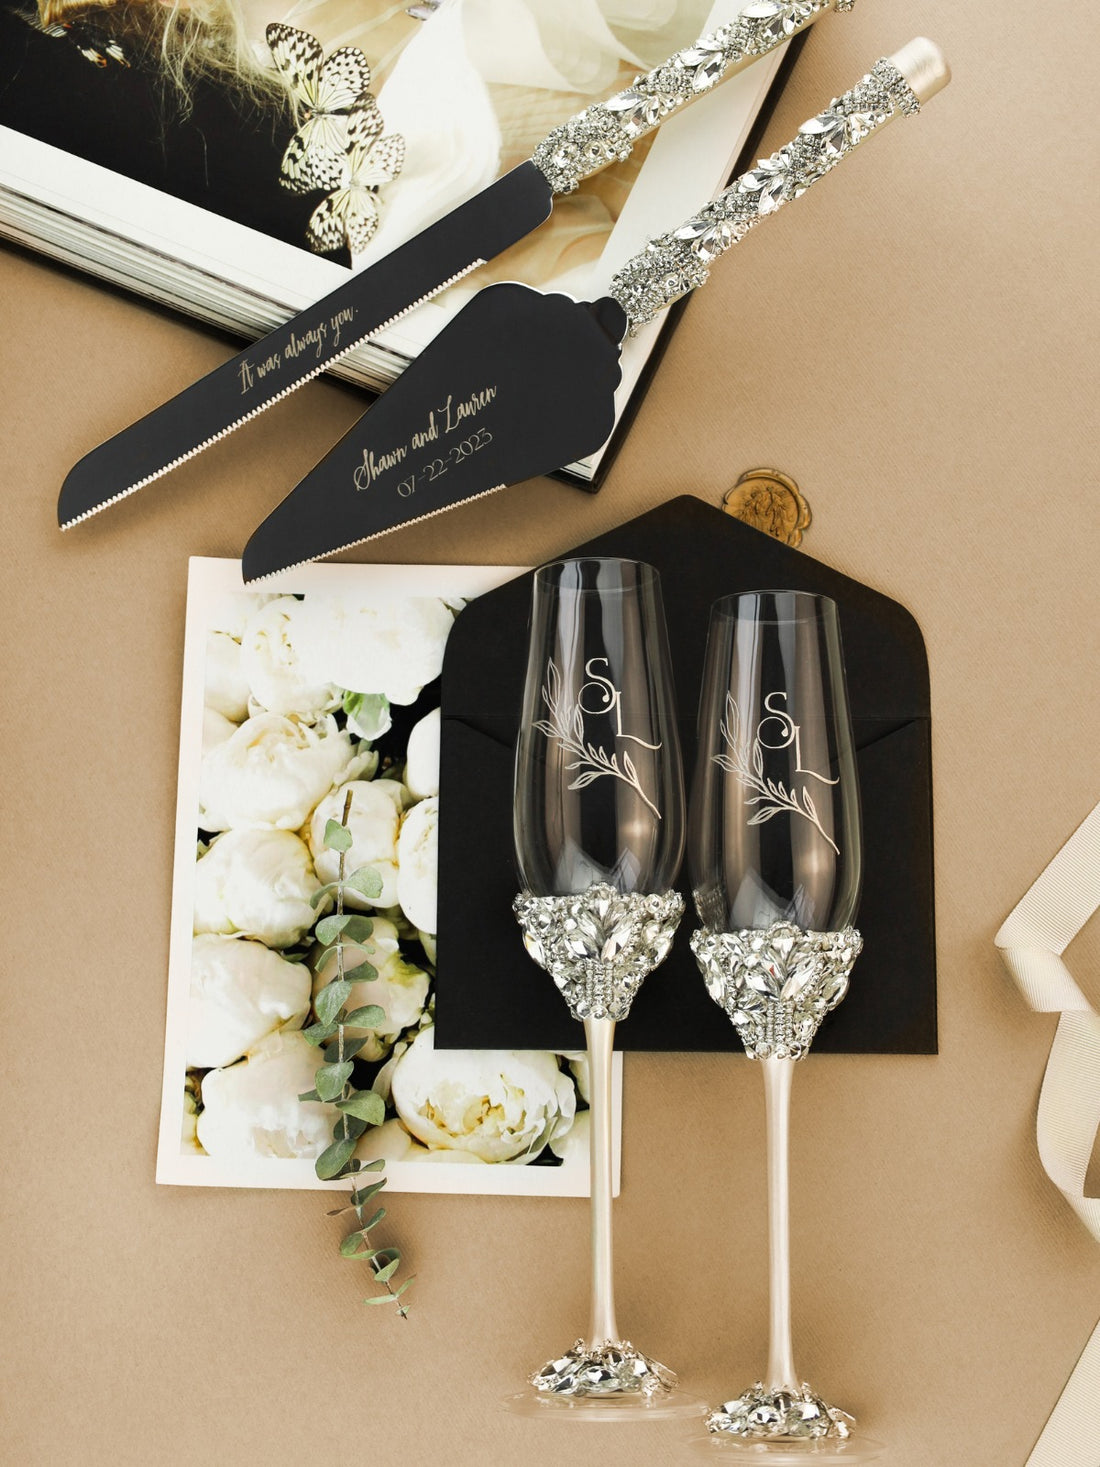 4-Piece Wedding Supplies - Cake Knife, Pie Server Set and Wedding Champagne  Glasses Set, 2 Toasting Champagne Flutes, 1 Pie Server and 1 Cutting